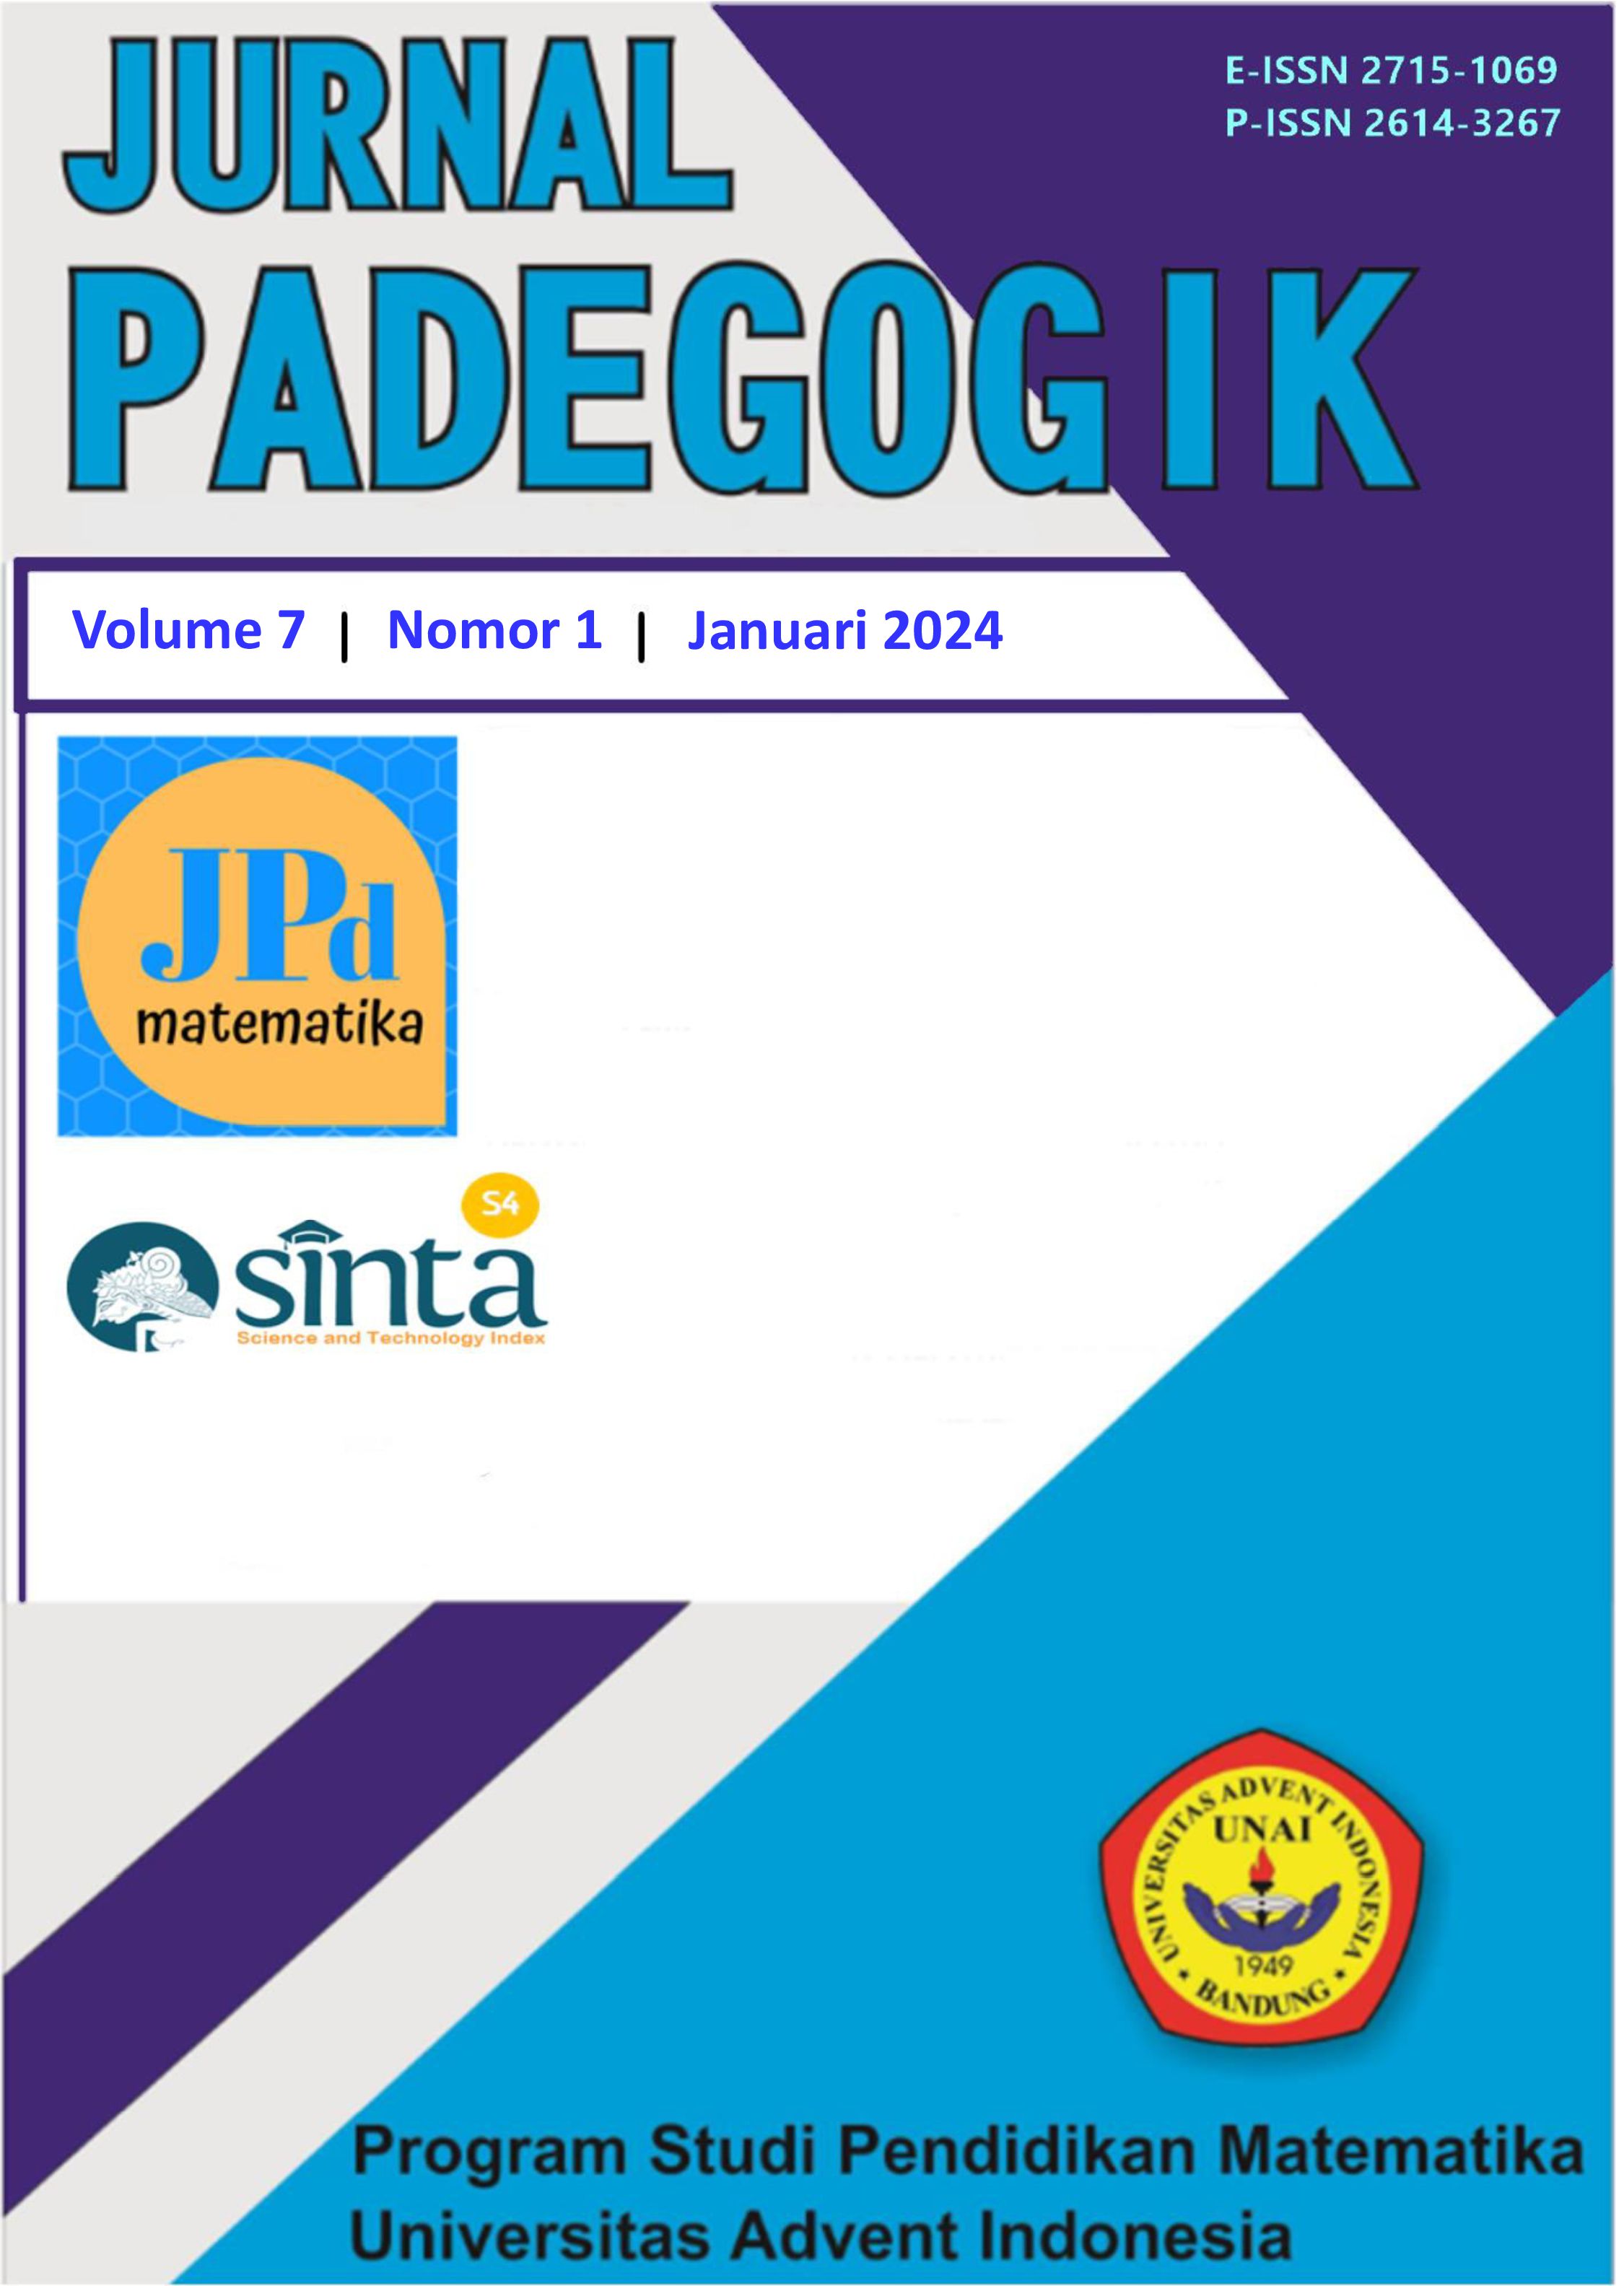 					View Vol. 7 No. 1 (2024): Jurnal Padegogik, January 2024
				